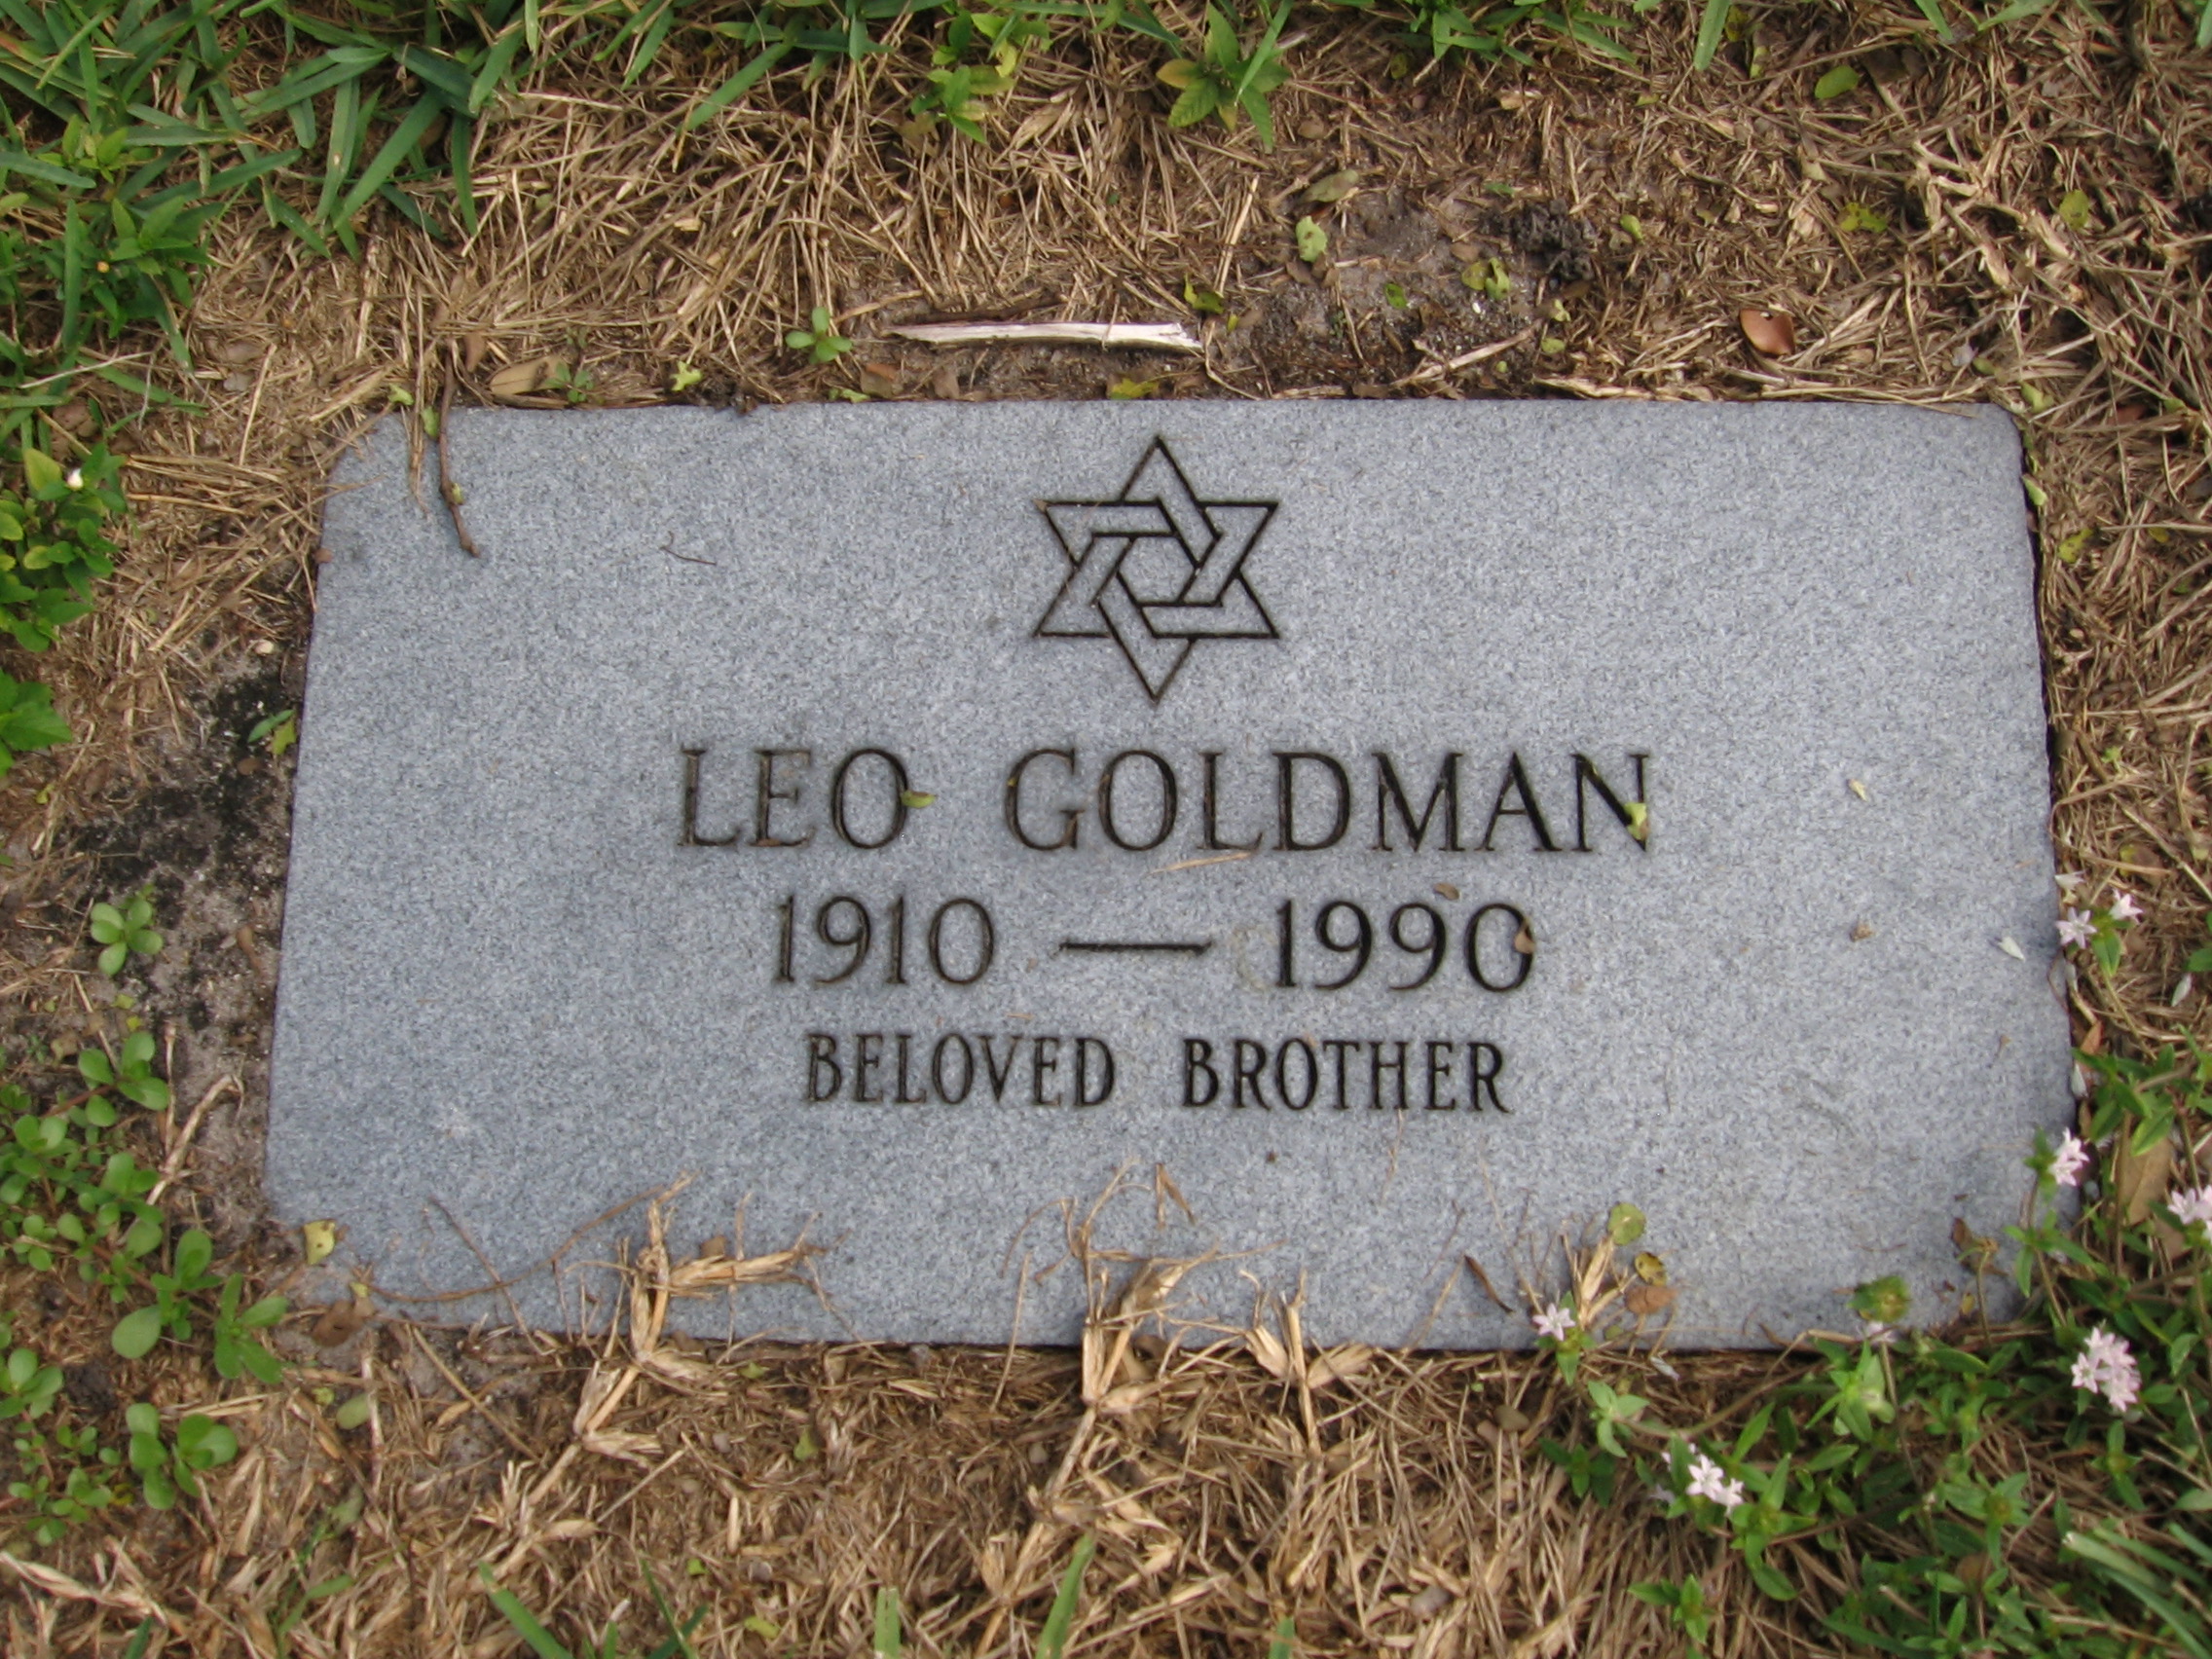 Leo Goldman